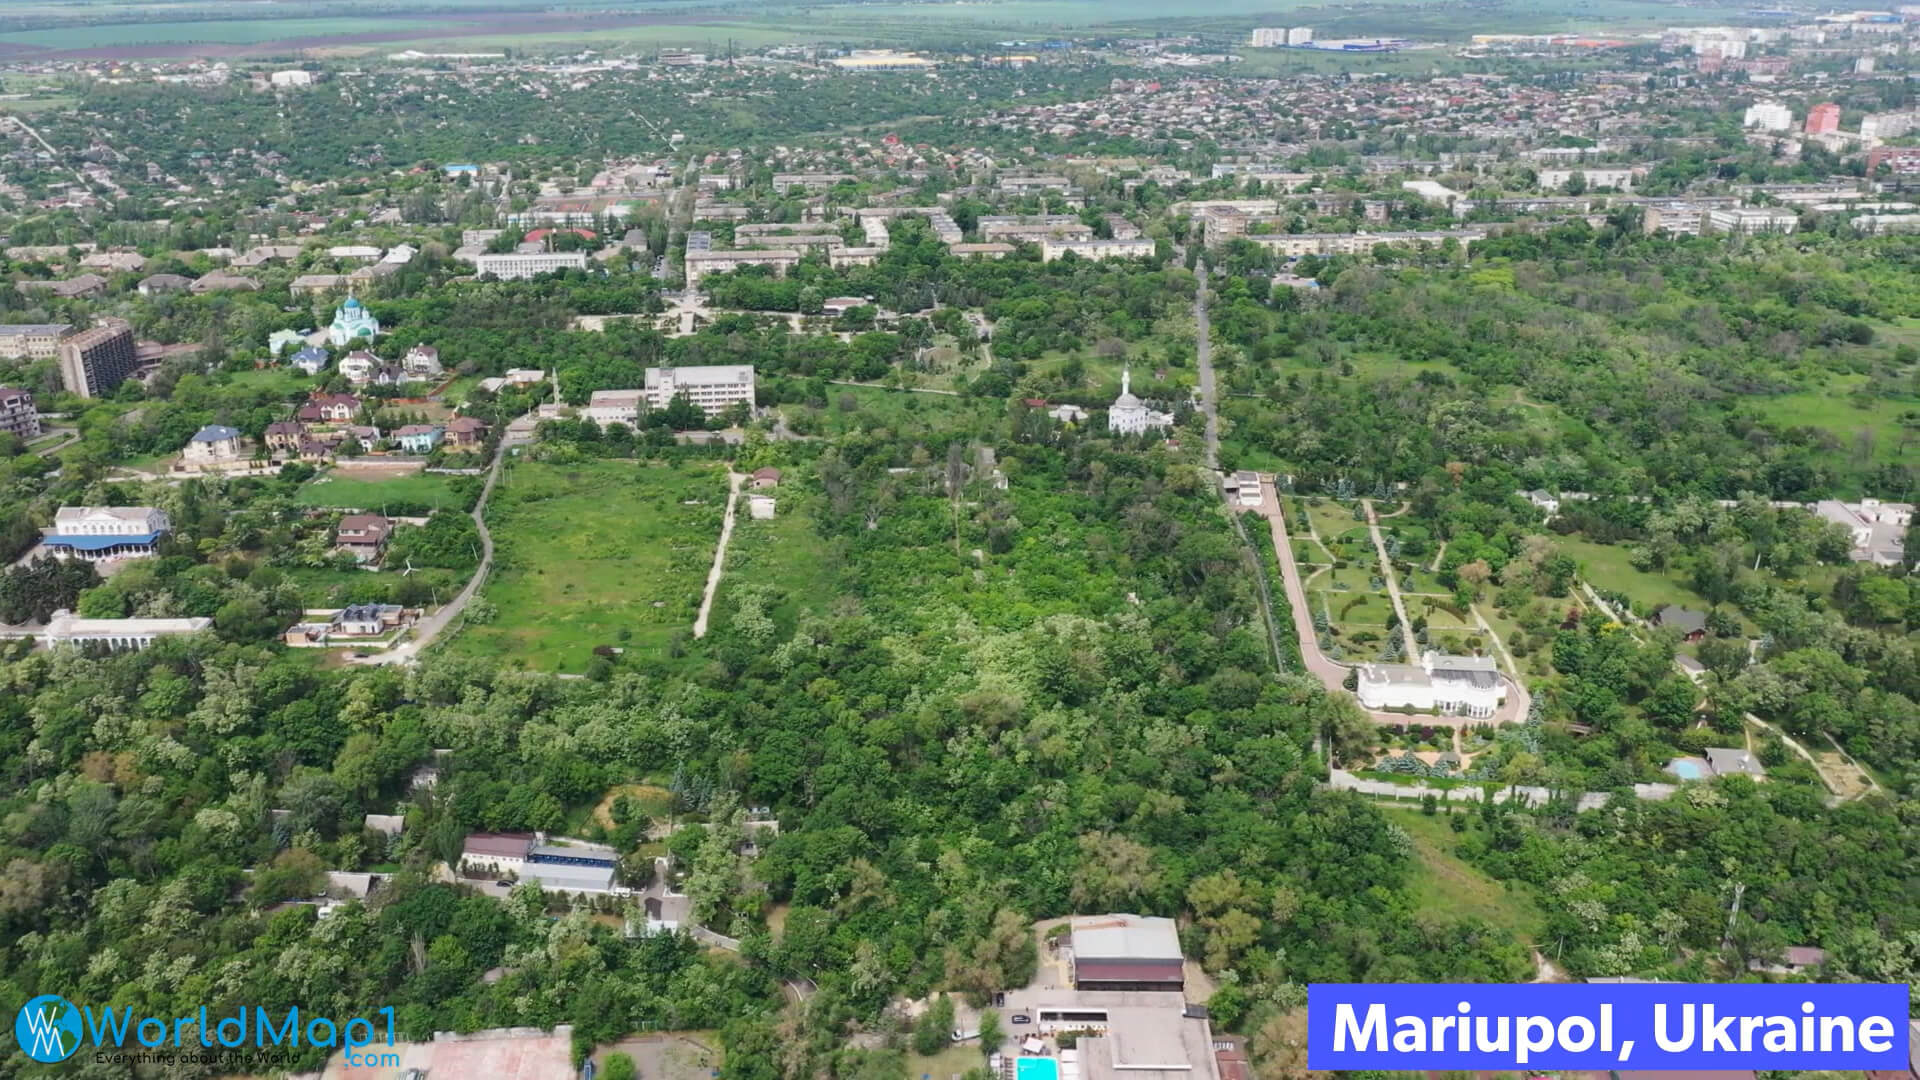 City of Mariupol in Ukraine